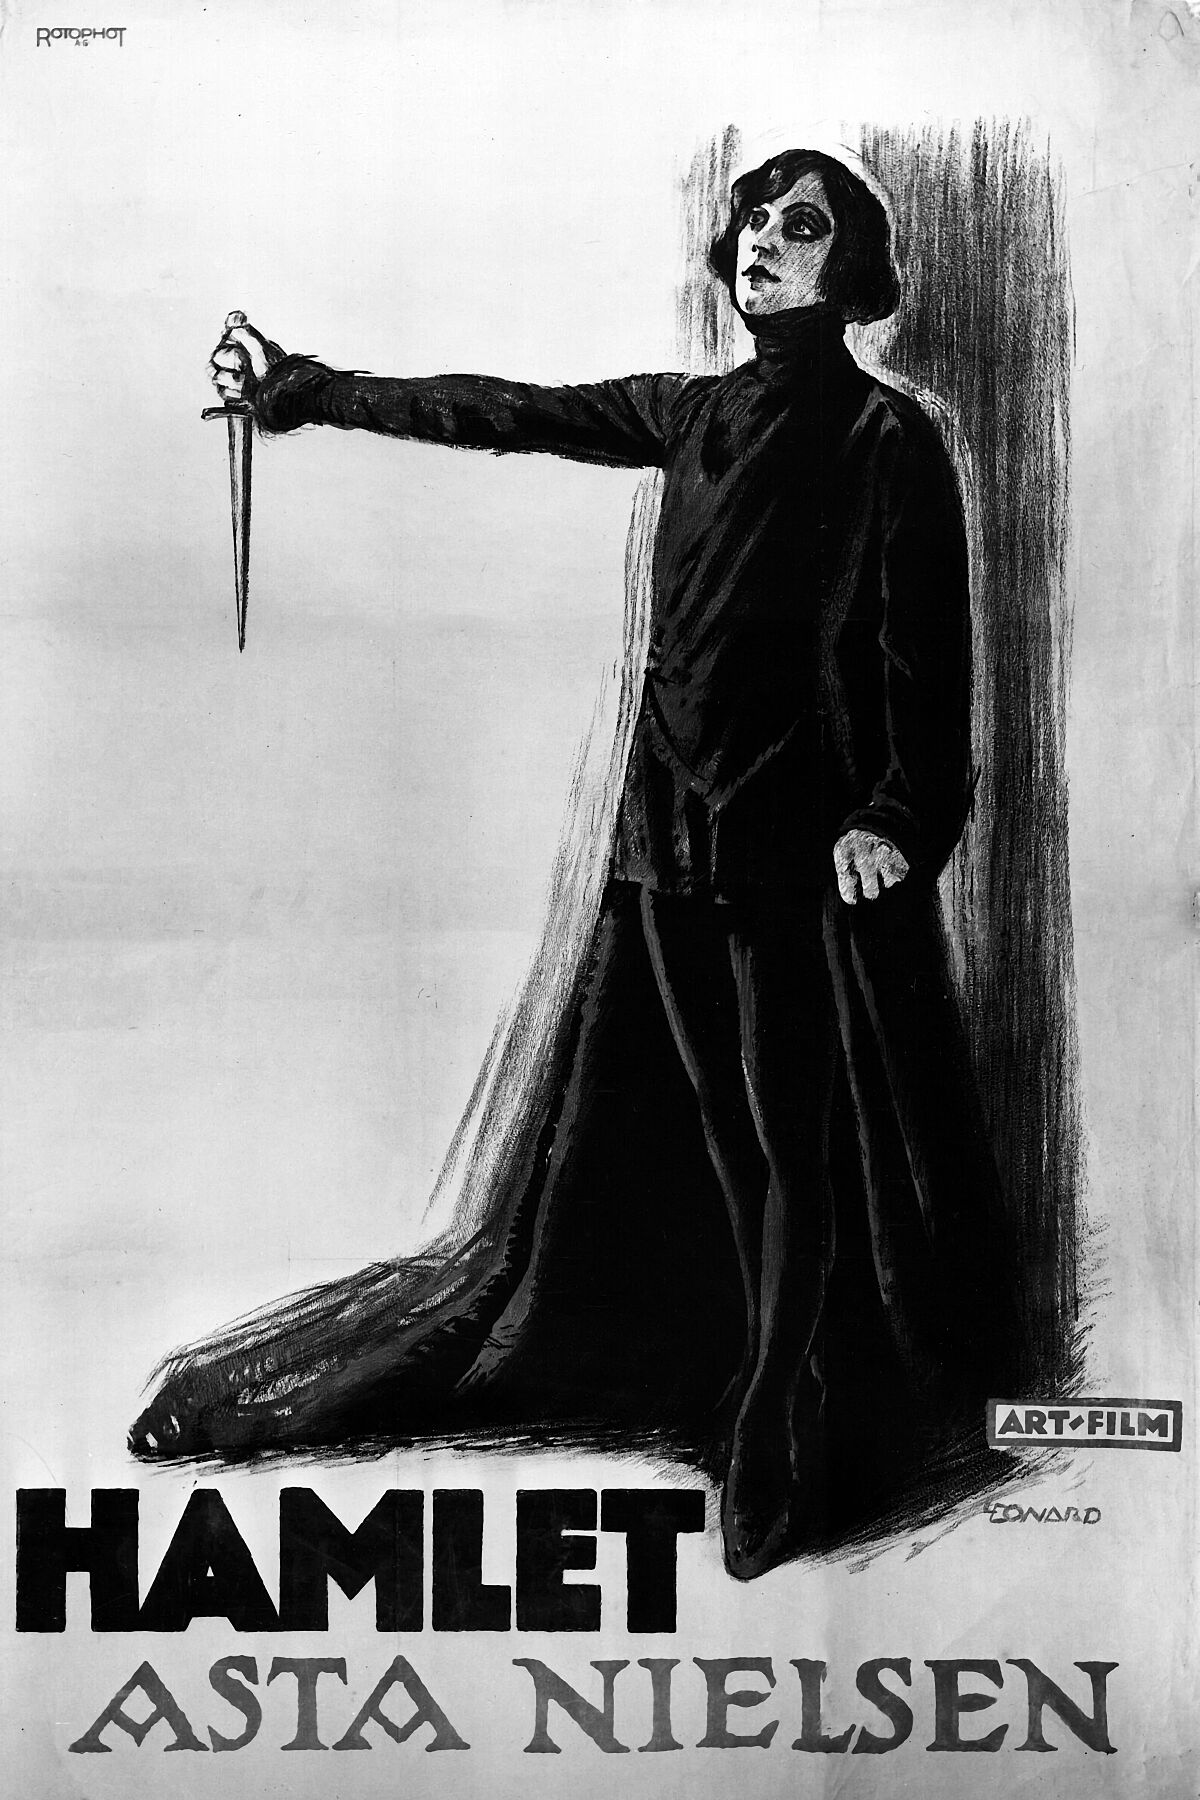 Hamlet Poster (print) designed by Robert L. Leonard - 1921